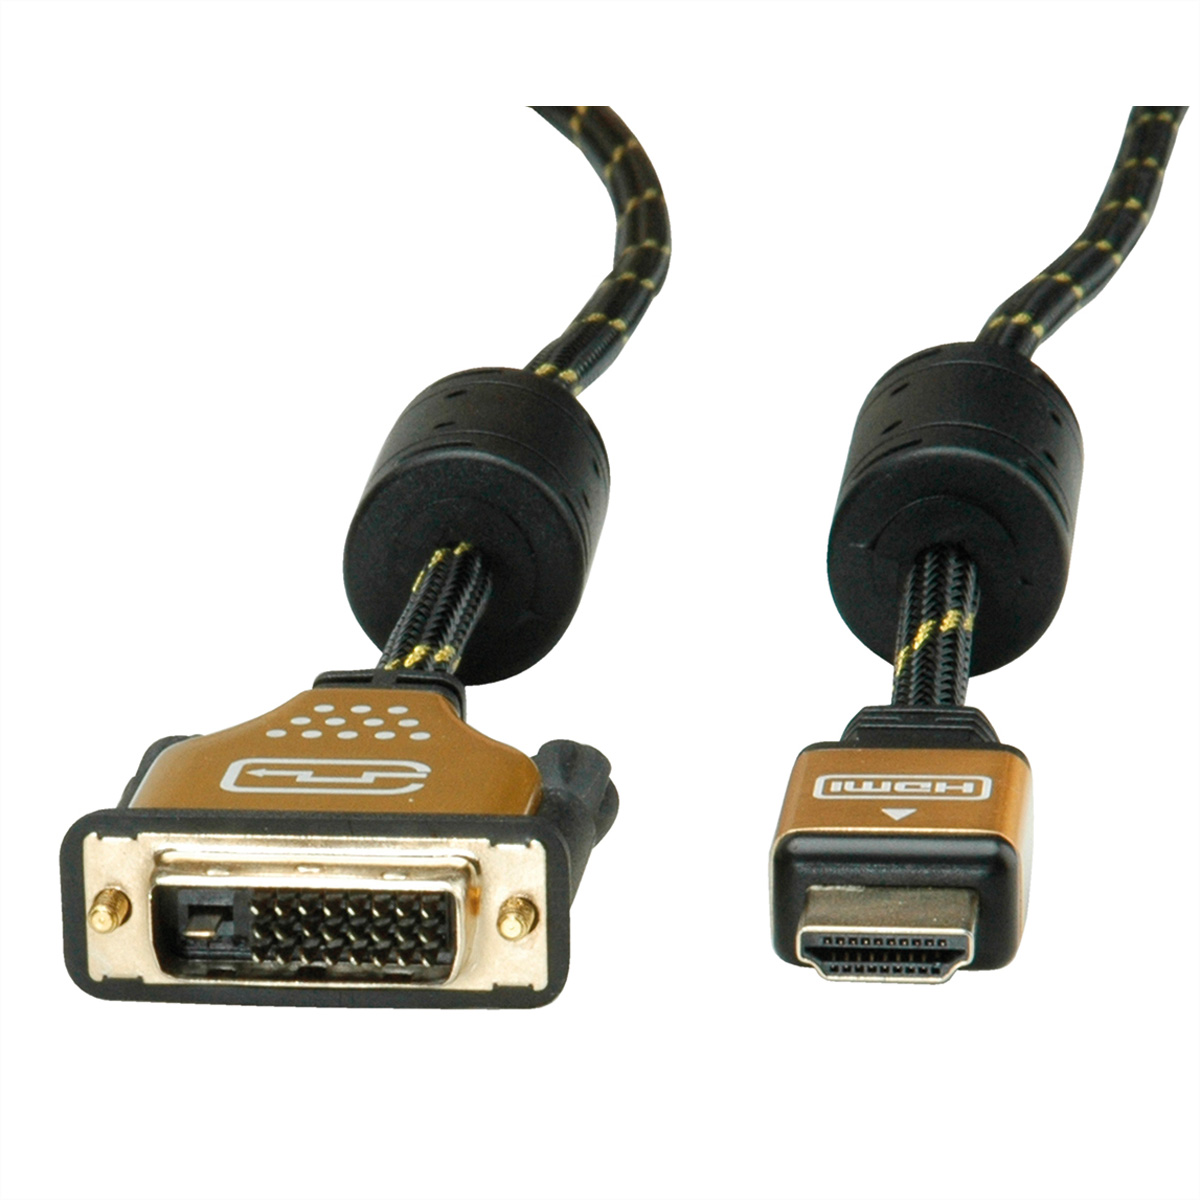 ROLINE Gold - Videokabel - Dual Link - HDMI / DVI - DVI-D (M) bis HDMI (M) - 7.5 m - abgeschirmt